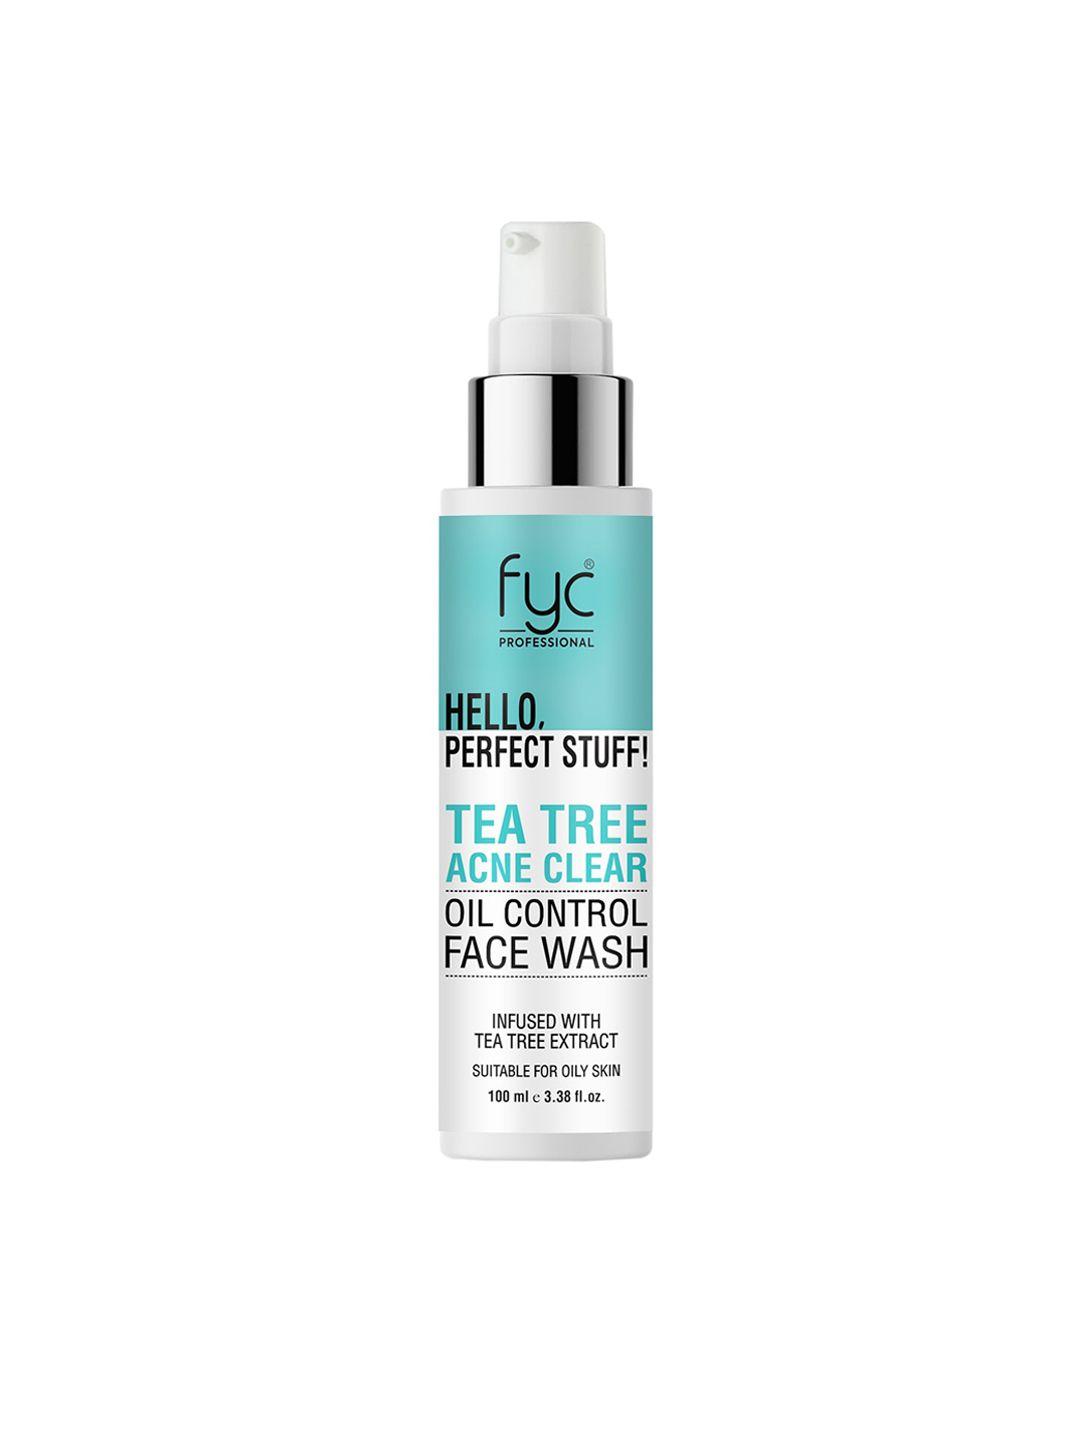 fyc professtional white tea tree face wash